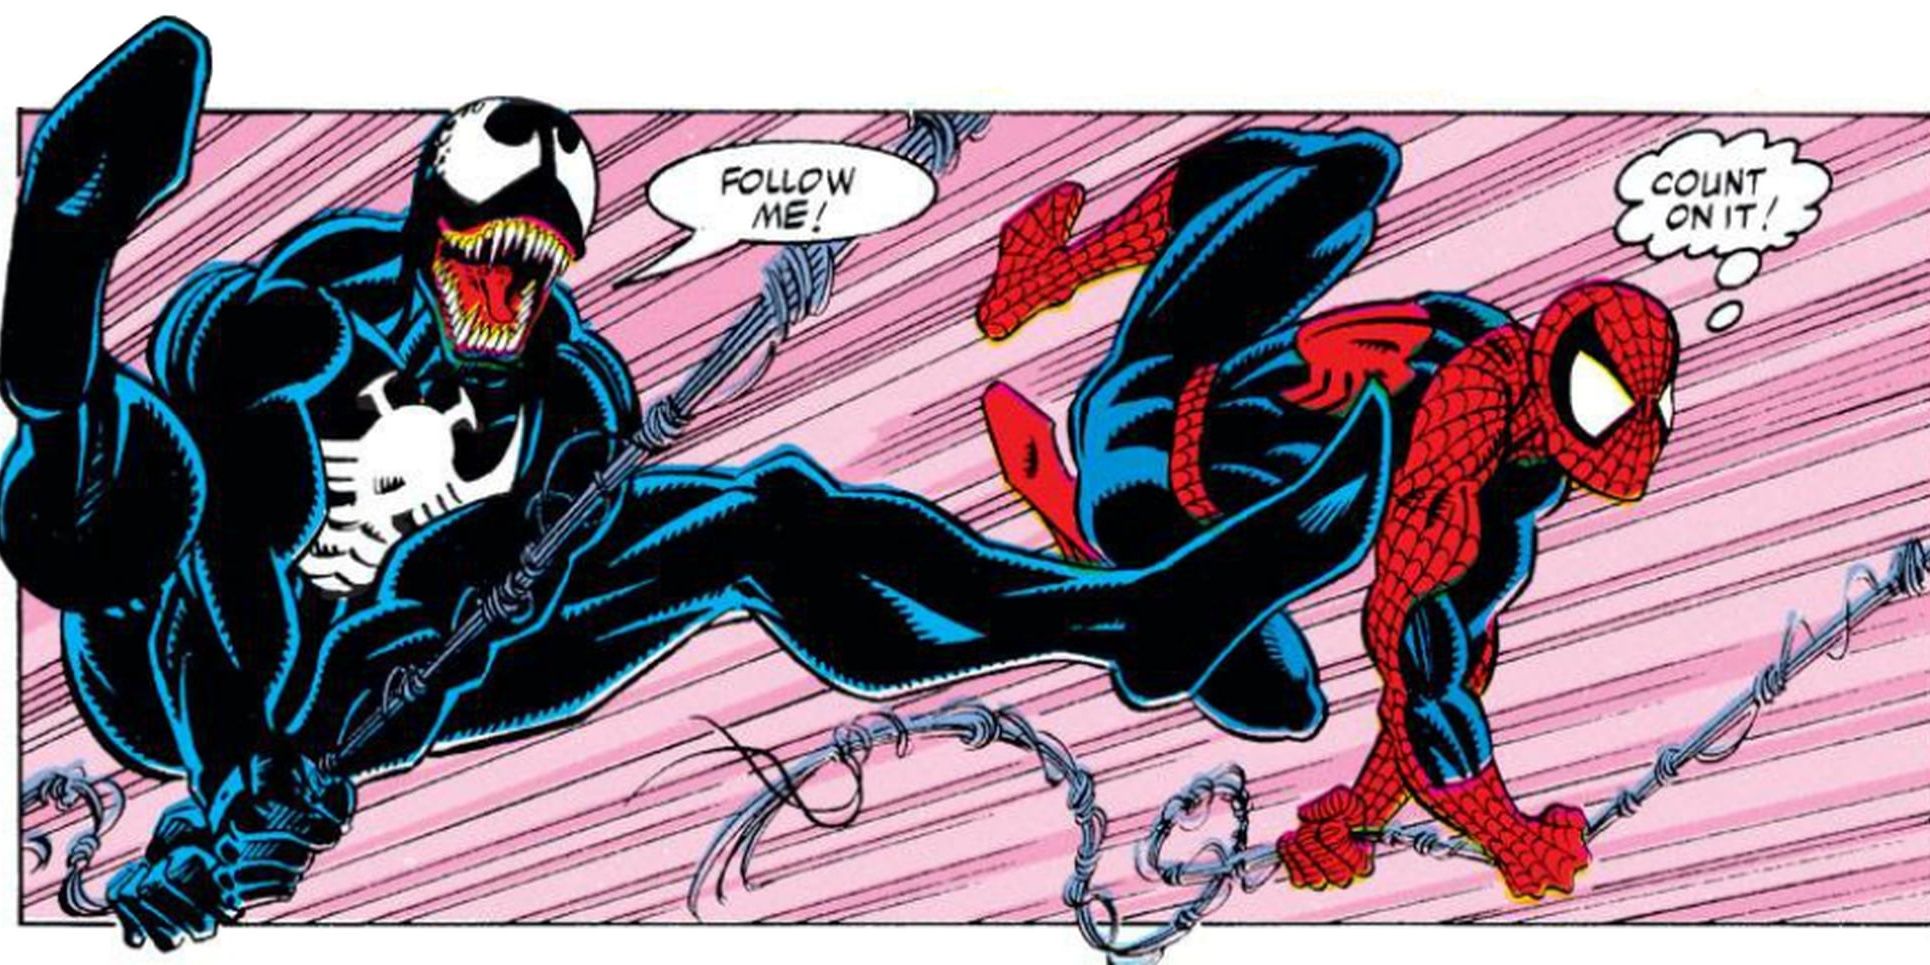 Marvel Comics' Venom and Spider-Man teaming up